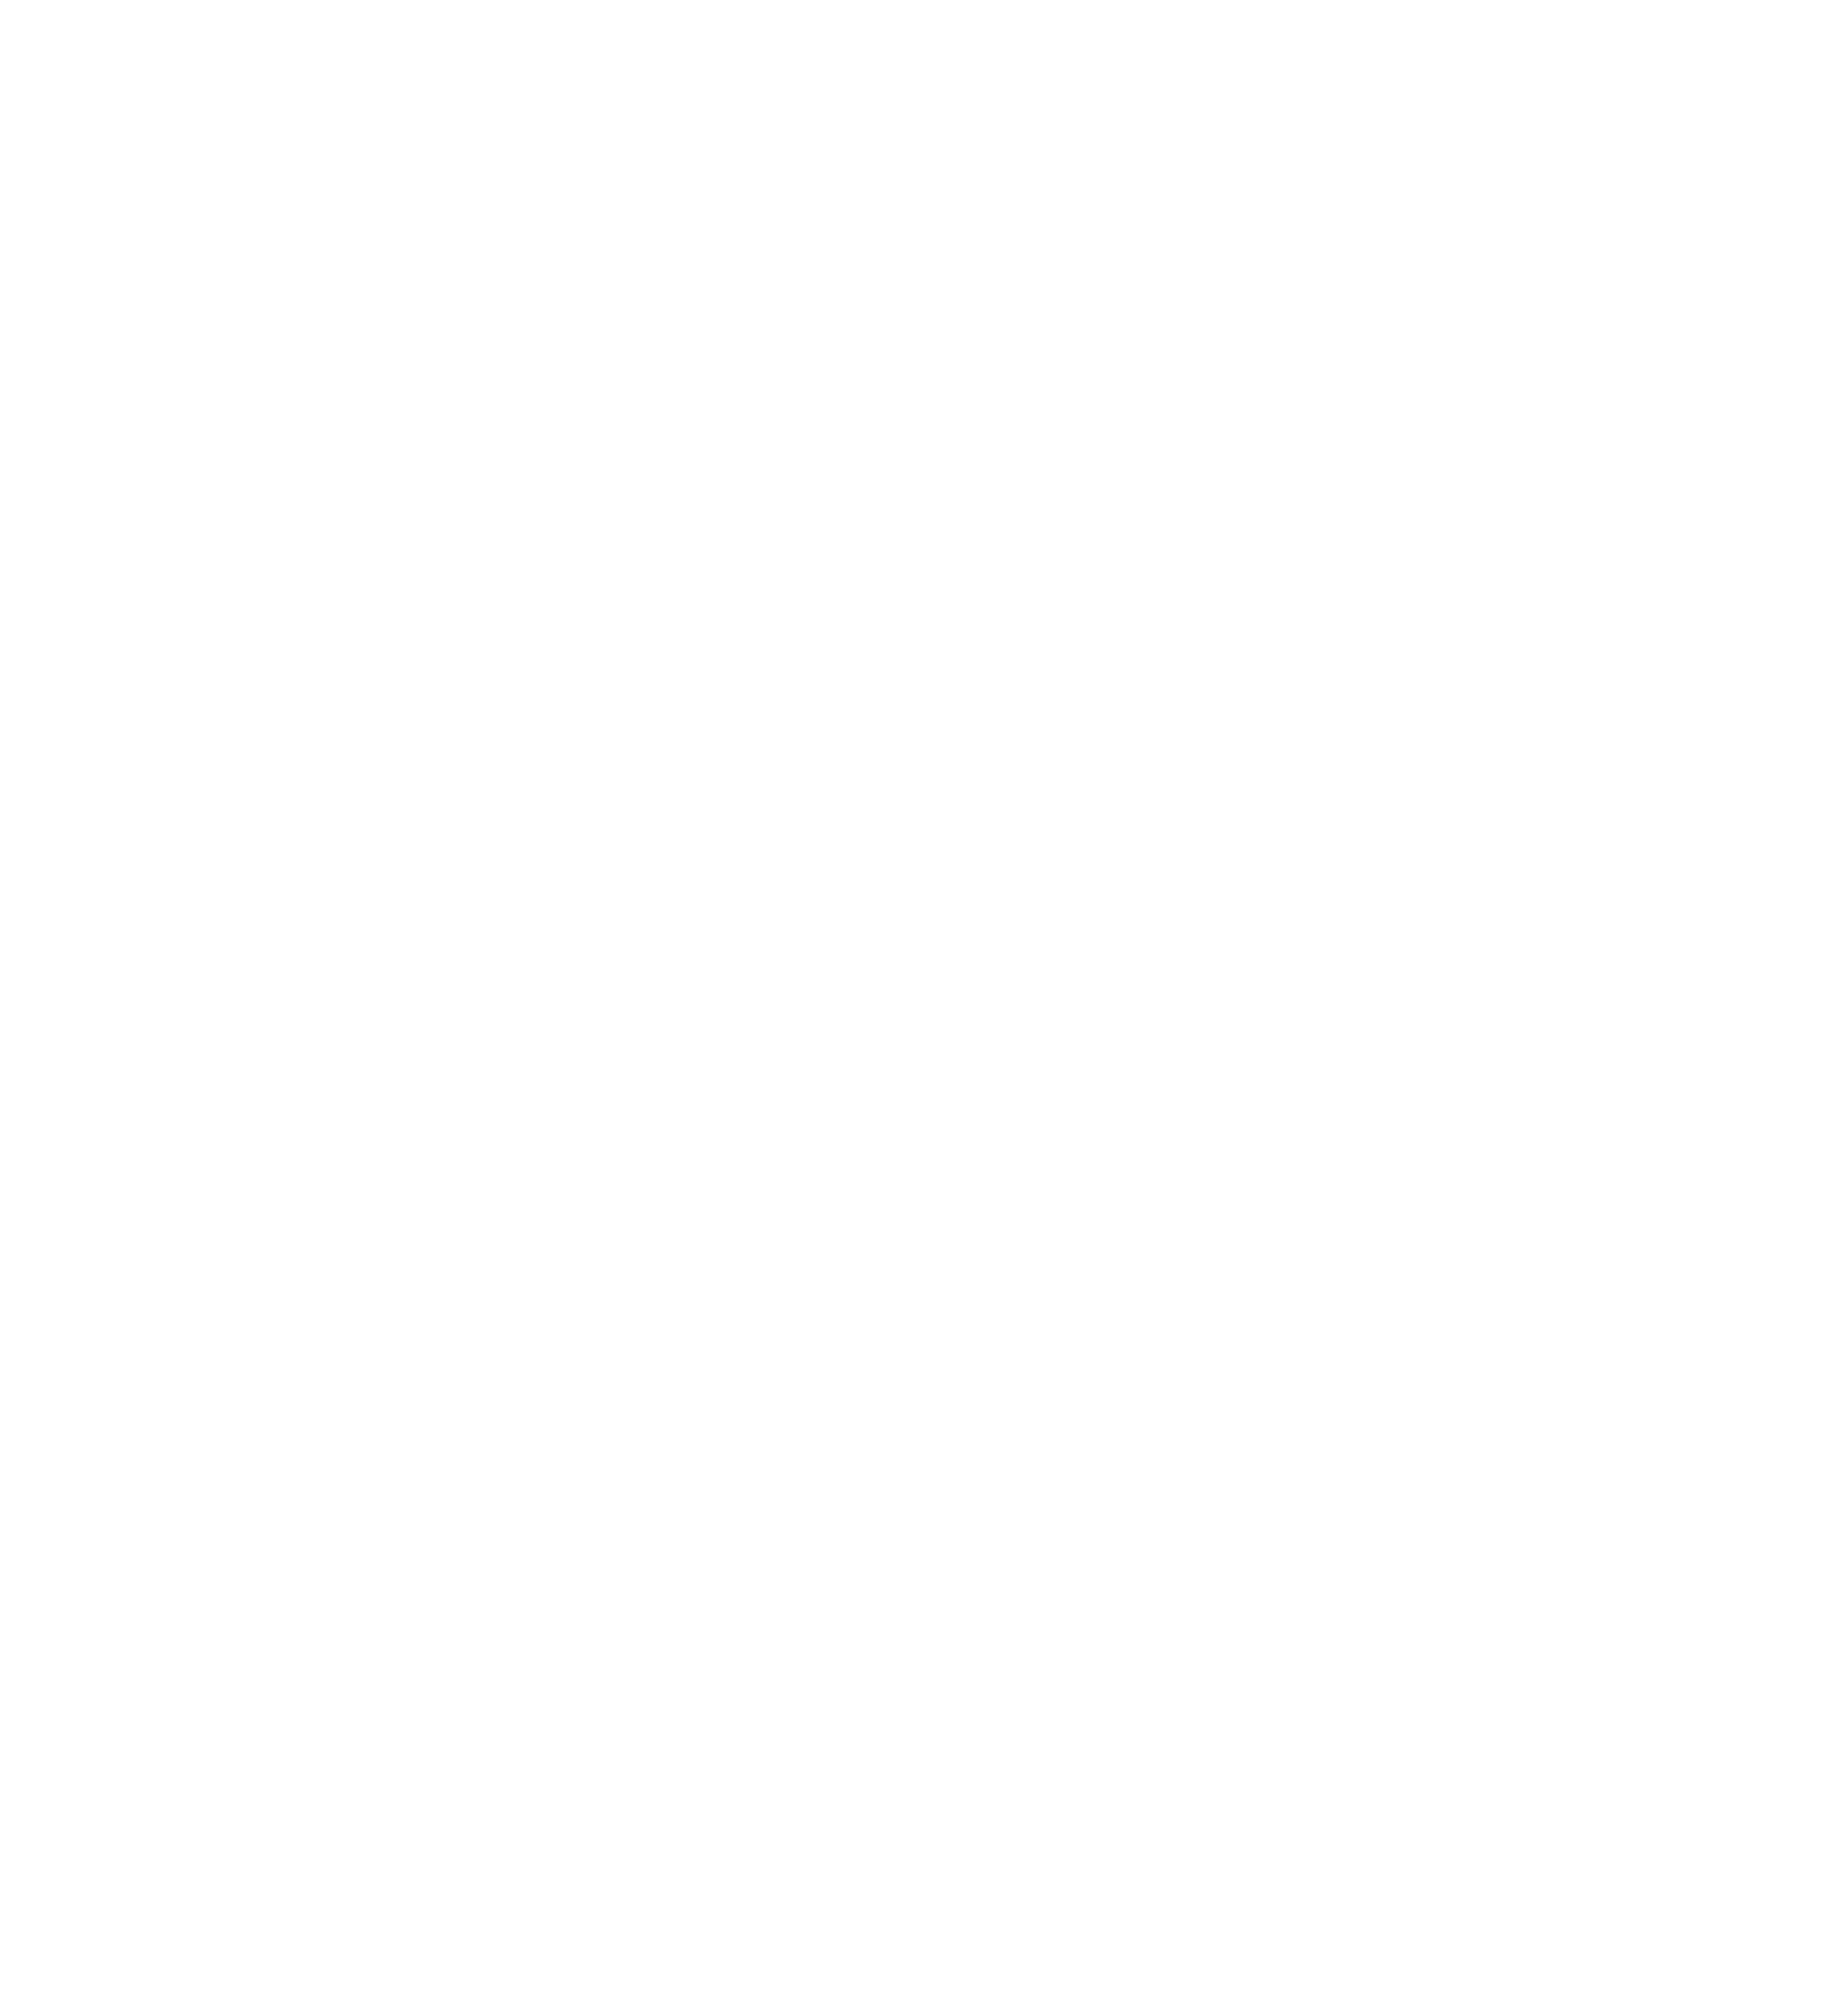 File:Robux 2019 Logo white.svg - Wikimedia Commons